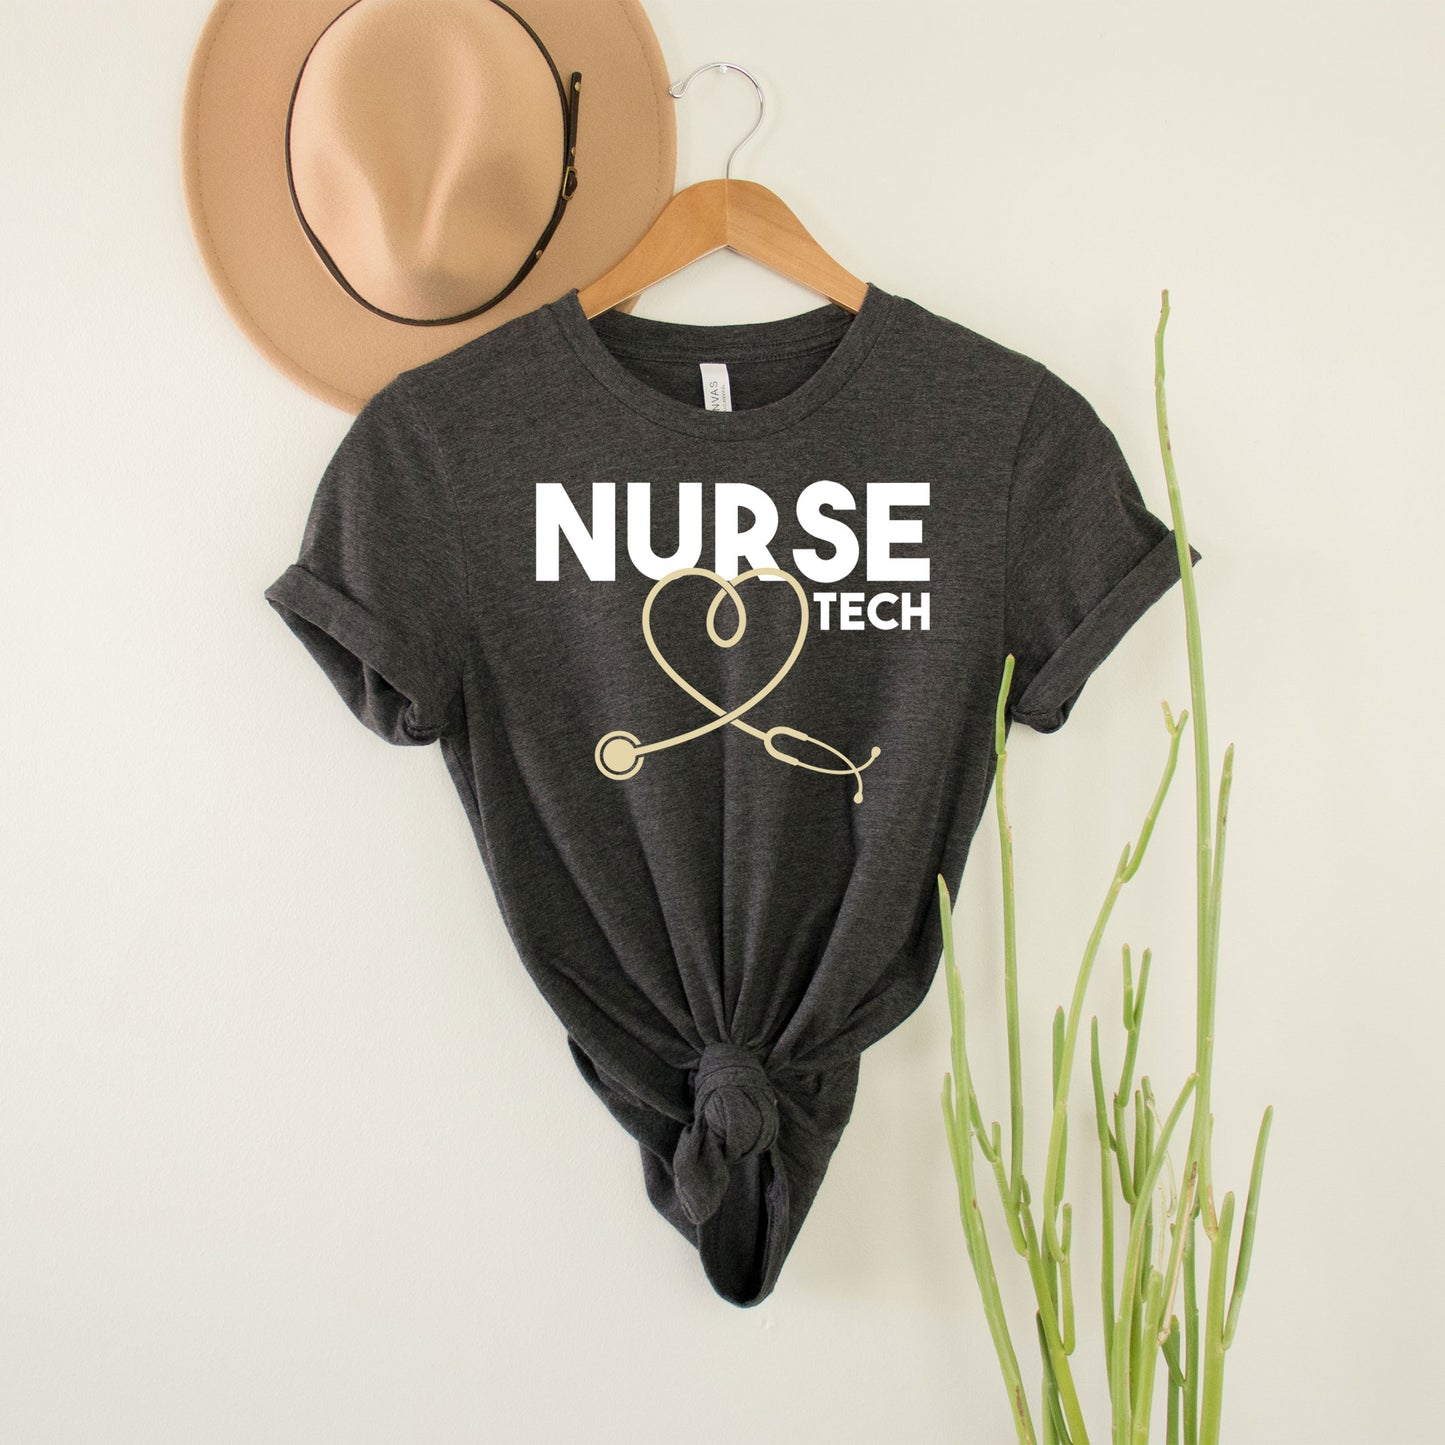 Tech Nurse Future Technology Academic Nurse T-Shirt